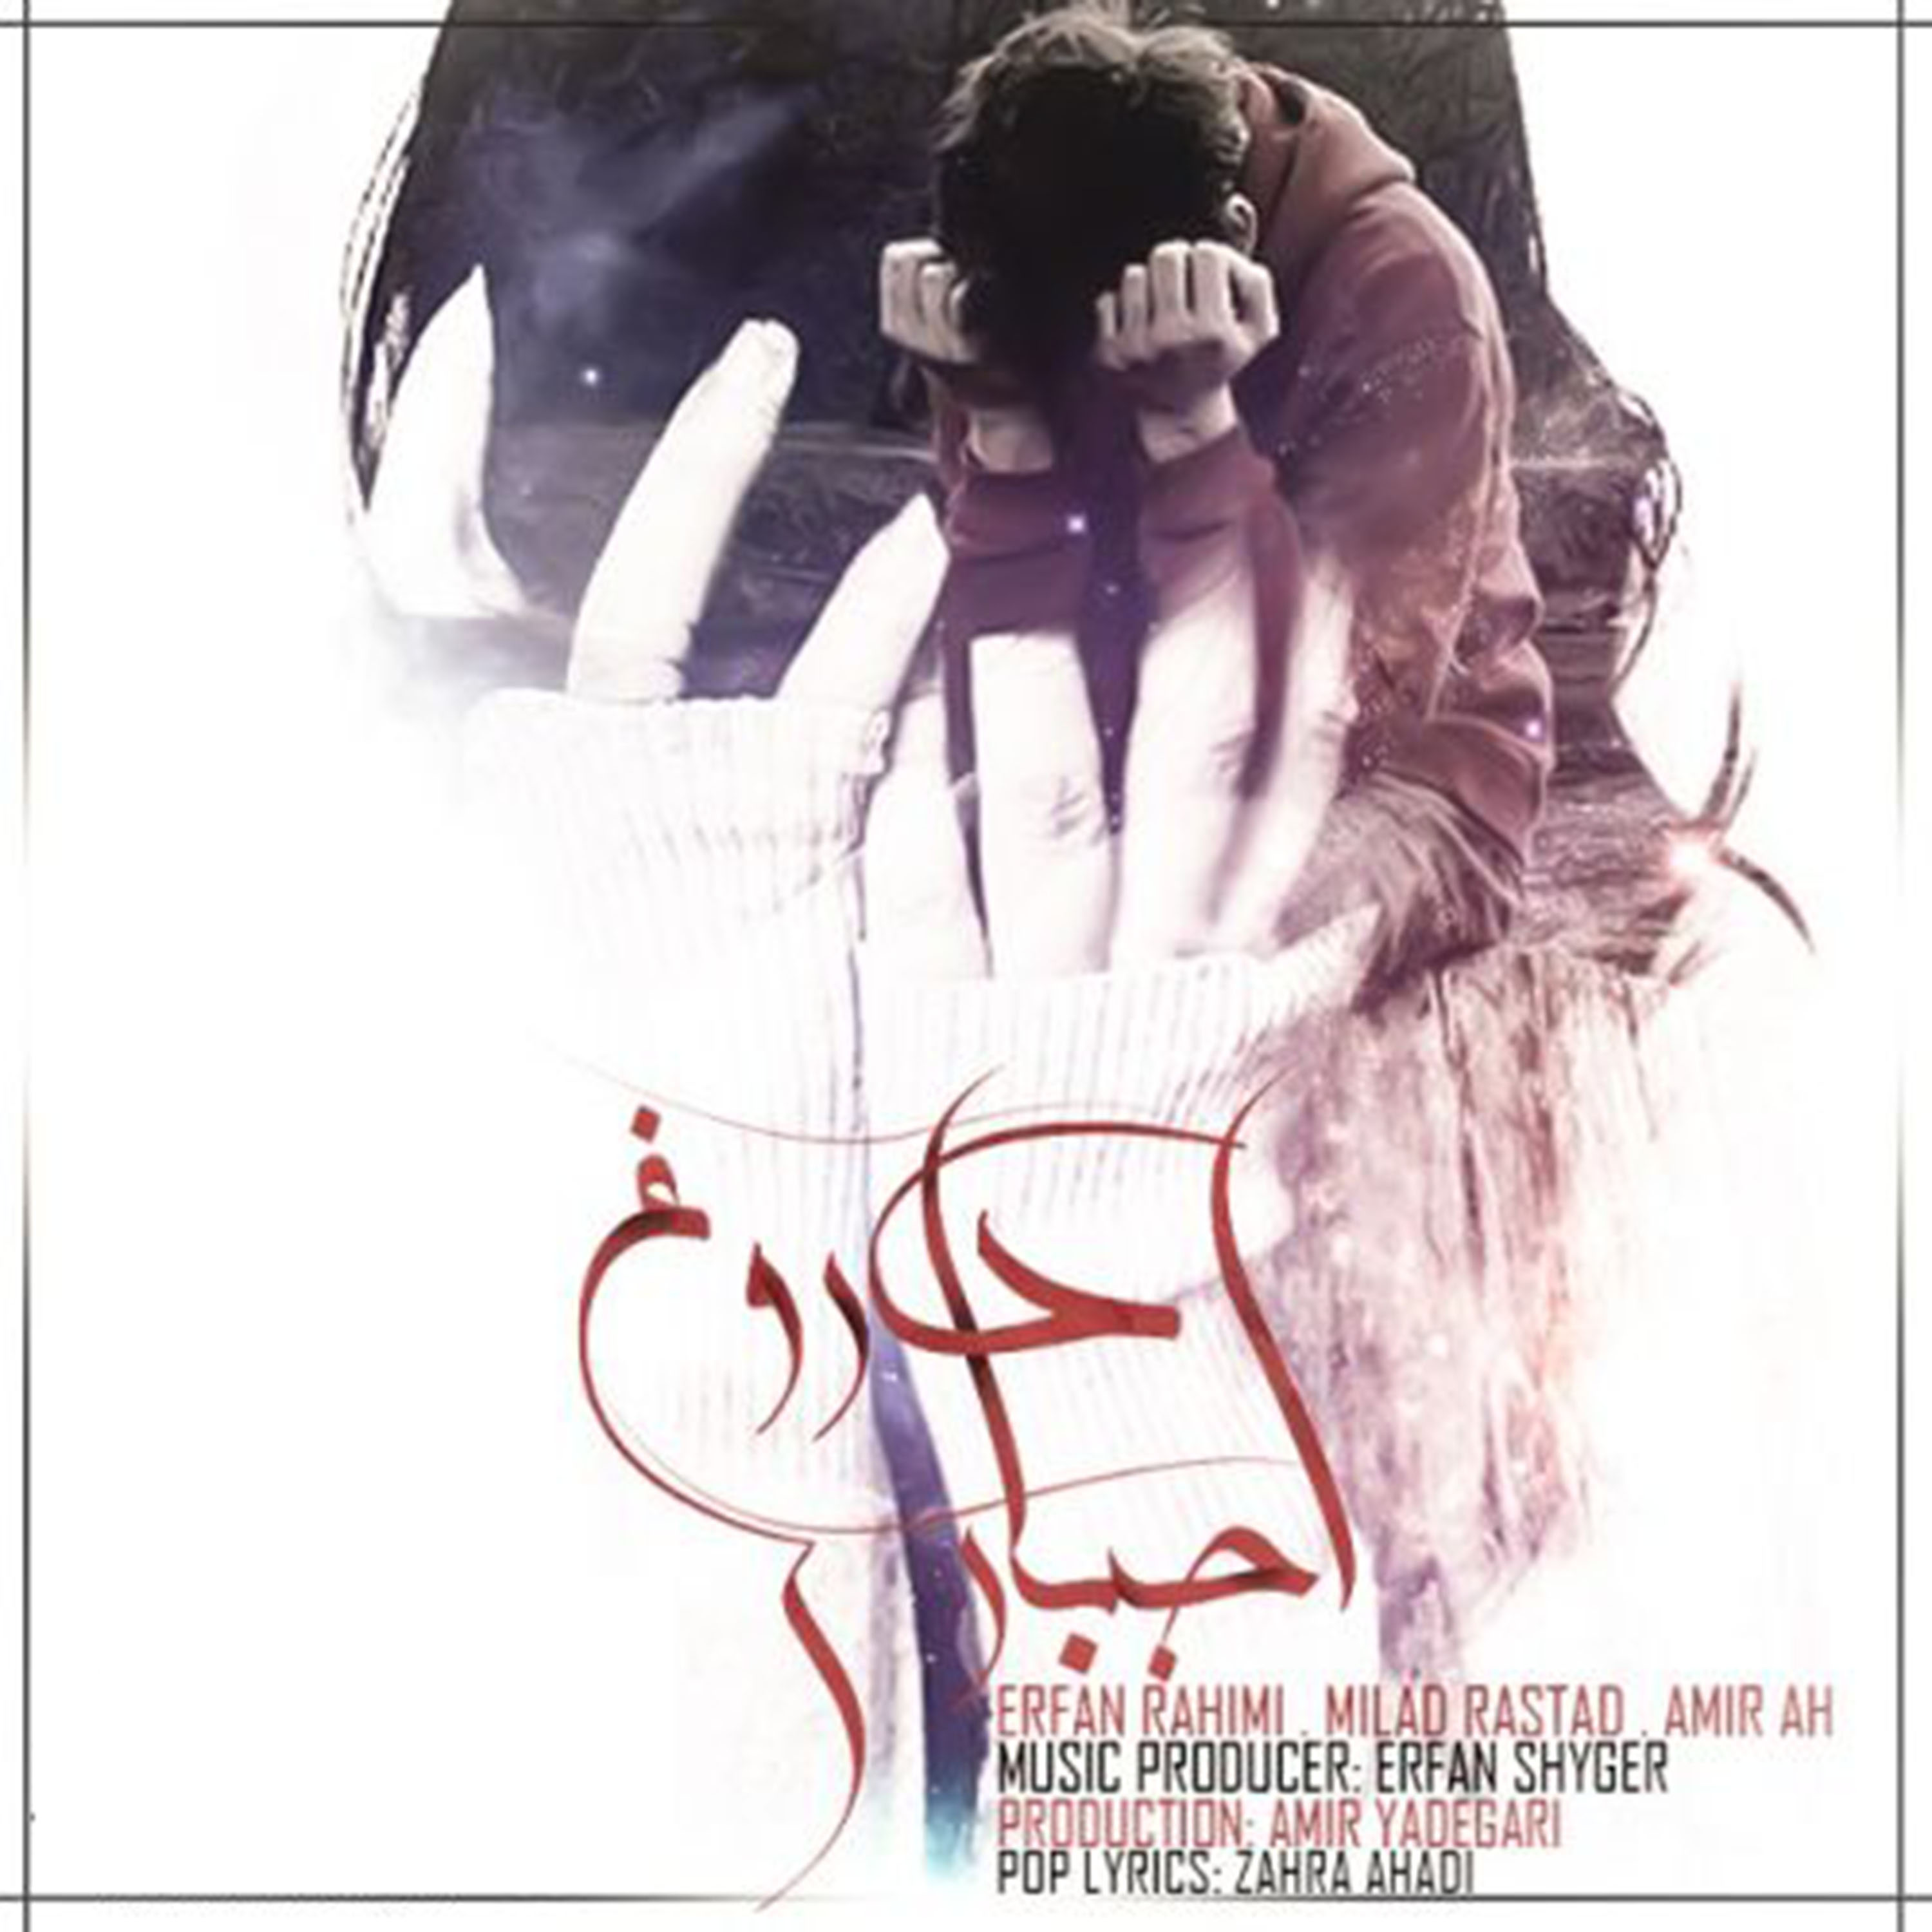  دانلود آهنگ جدید میلاد راستاد - دروغ اجباری | Download New Music By Milad Rastad - Dorooghe Ejbari (feat. Erfan Rahimi & Amir A.H)